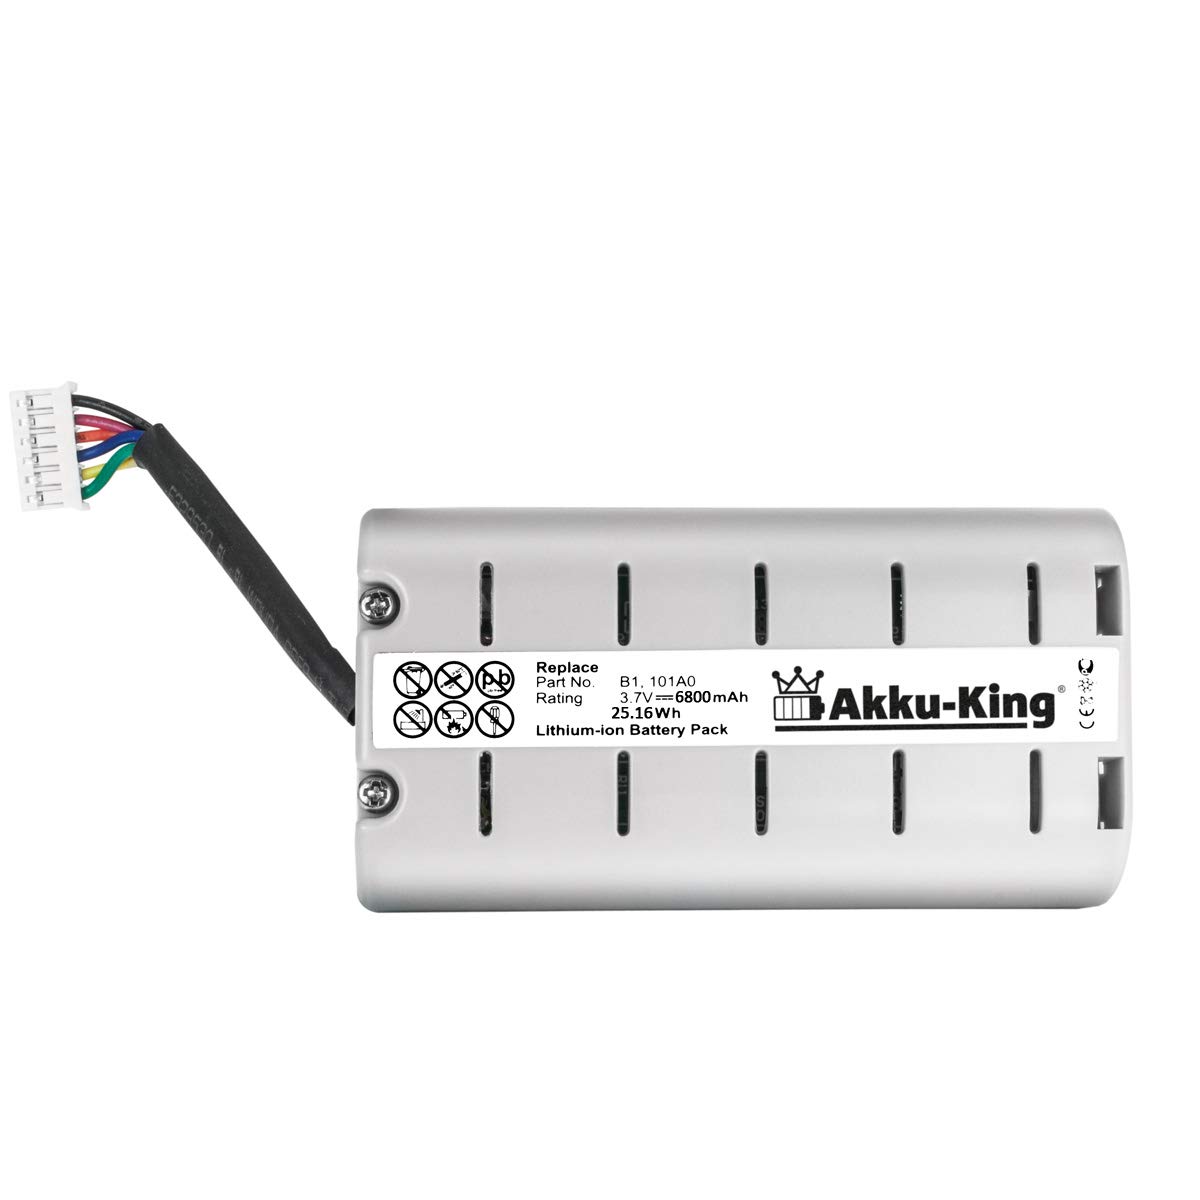 Akku-King Akku kompatibel mit Pure One Mini, VL-61114, Evoke-1 - ersetzt ChargePAK B1, 101A0 - Li-Ion 6800mAh